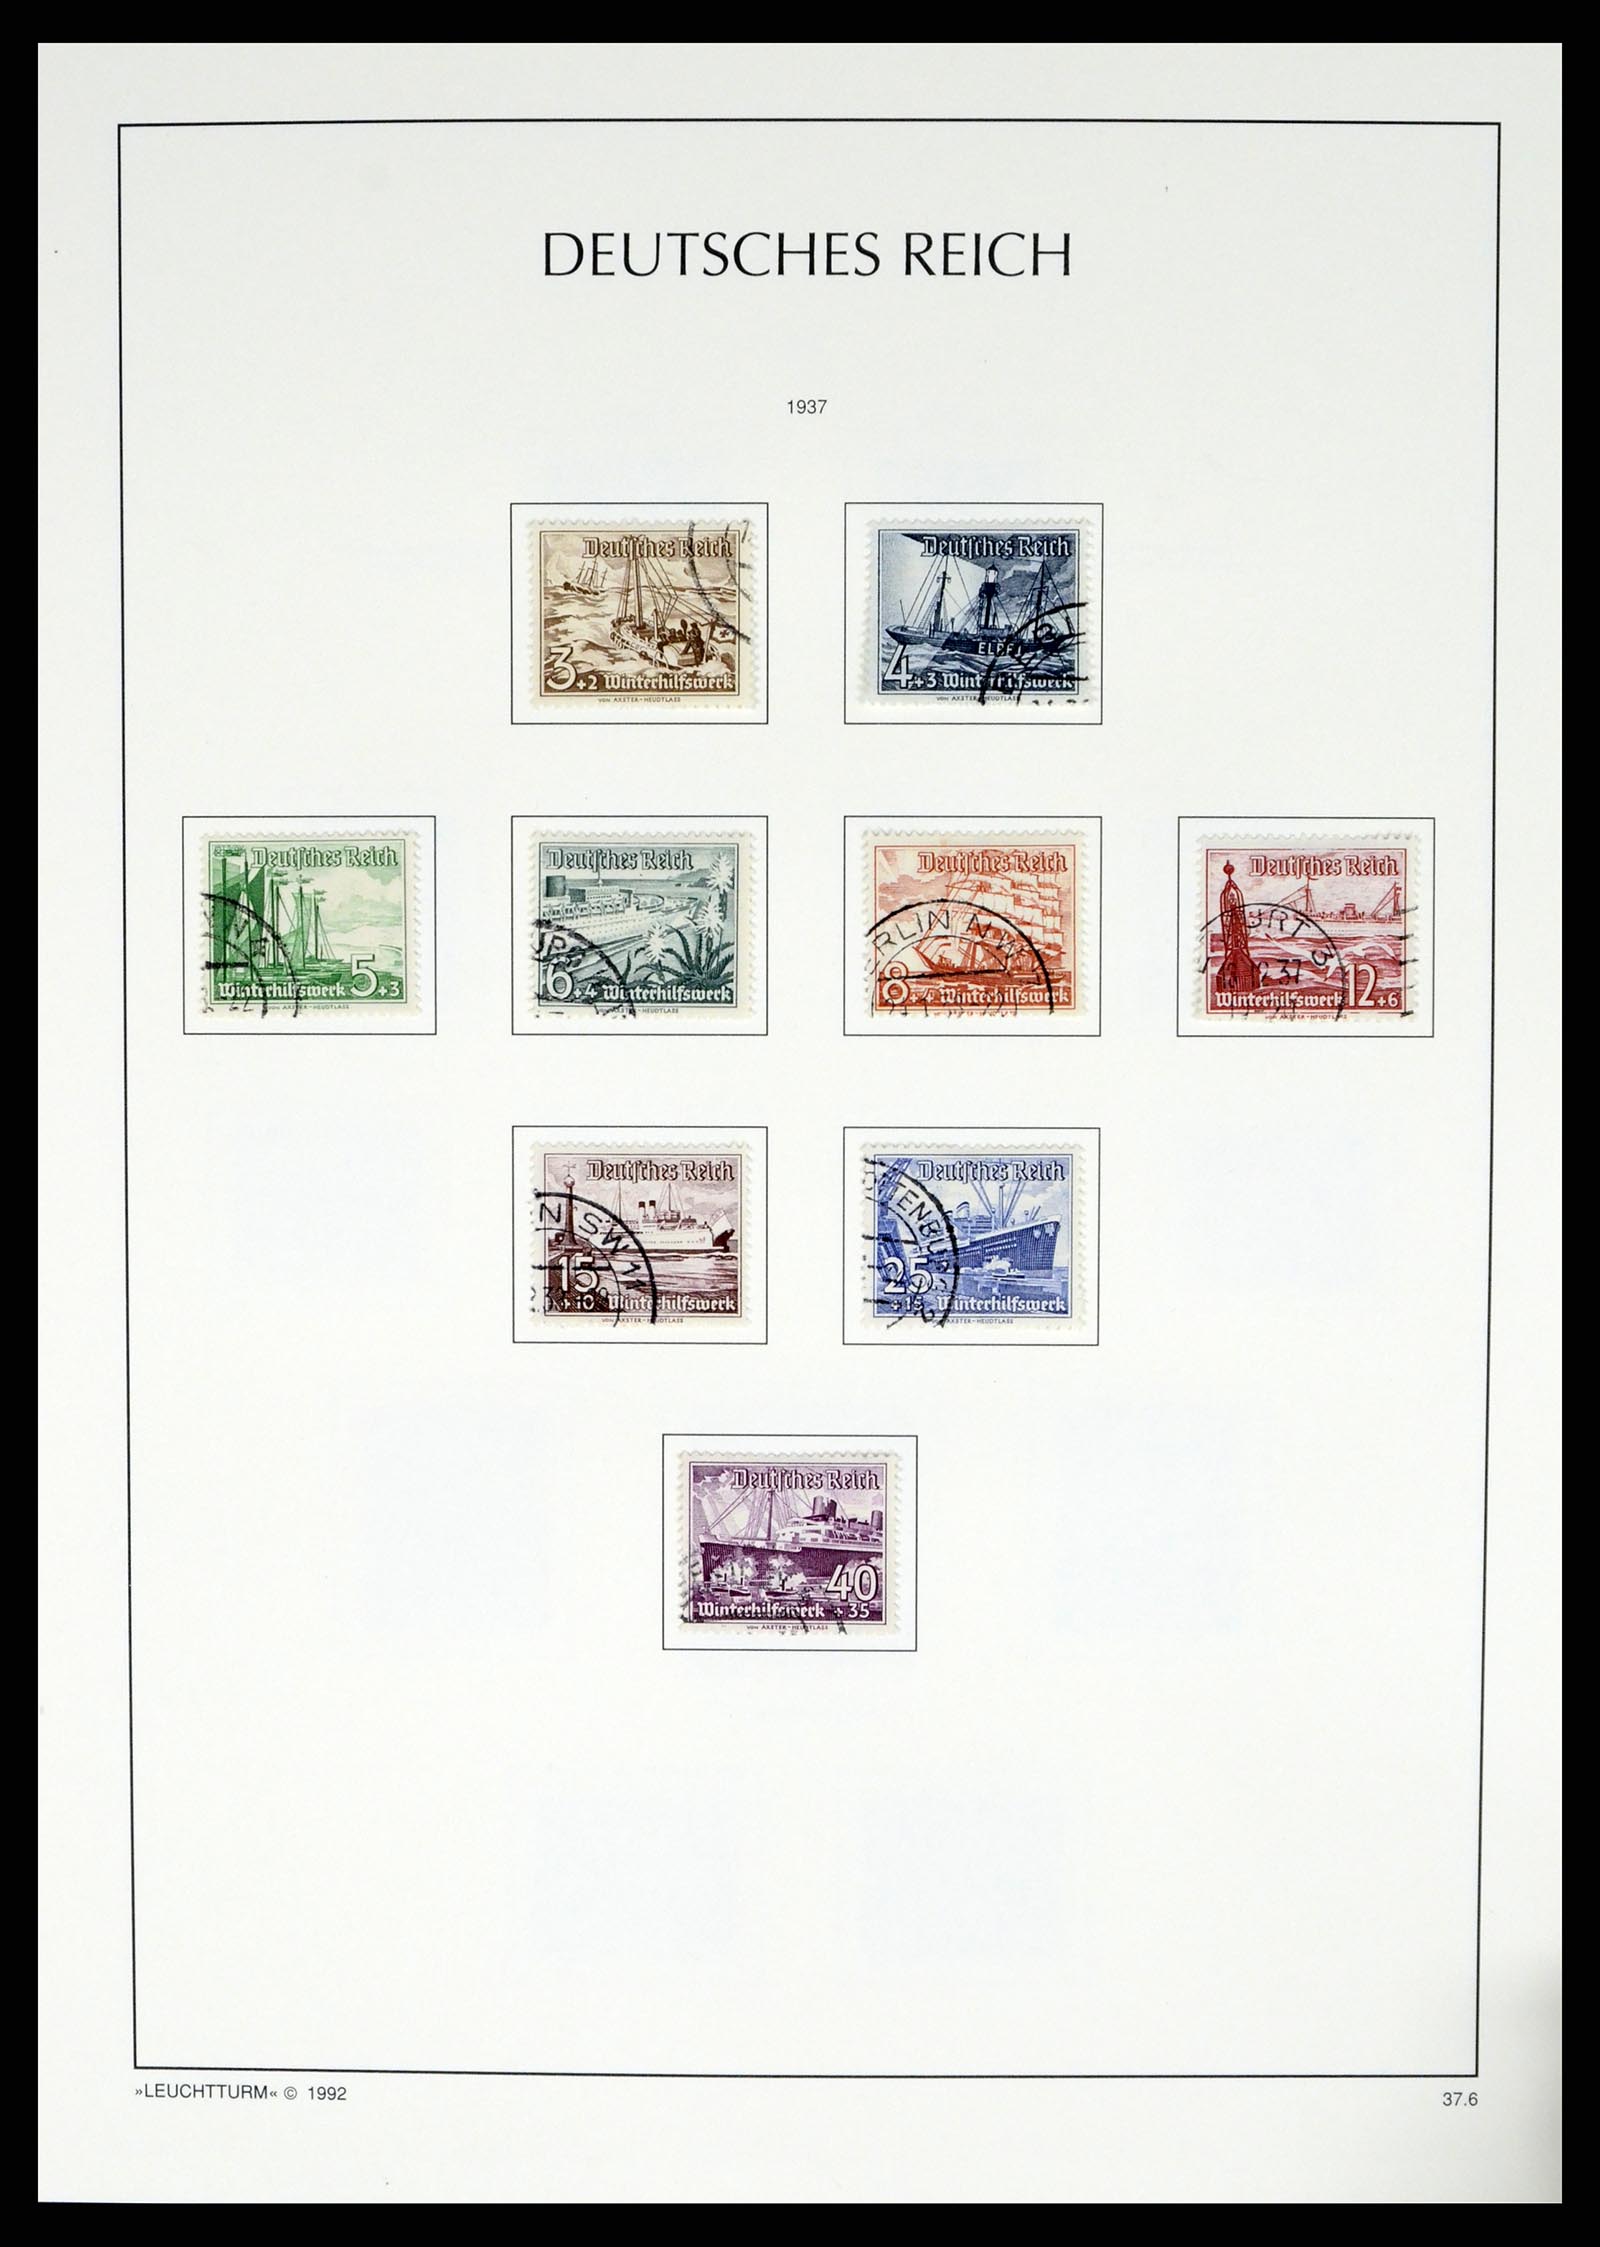 37497 086 - Stamp collection 37497 German Reich 1872-1945.